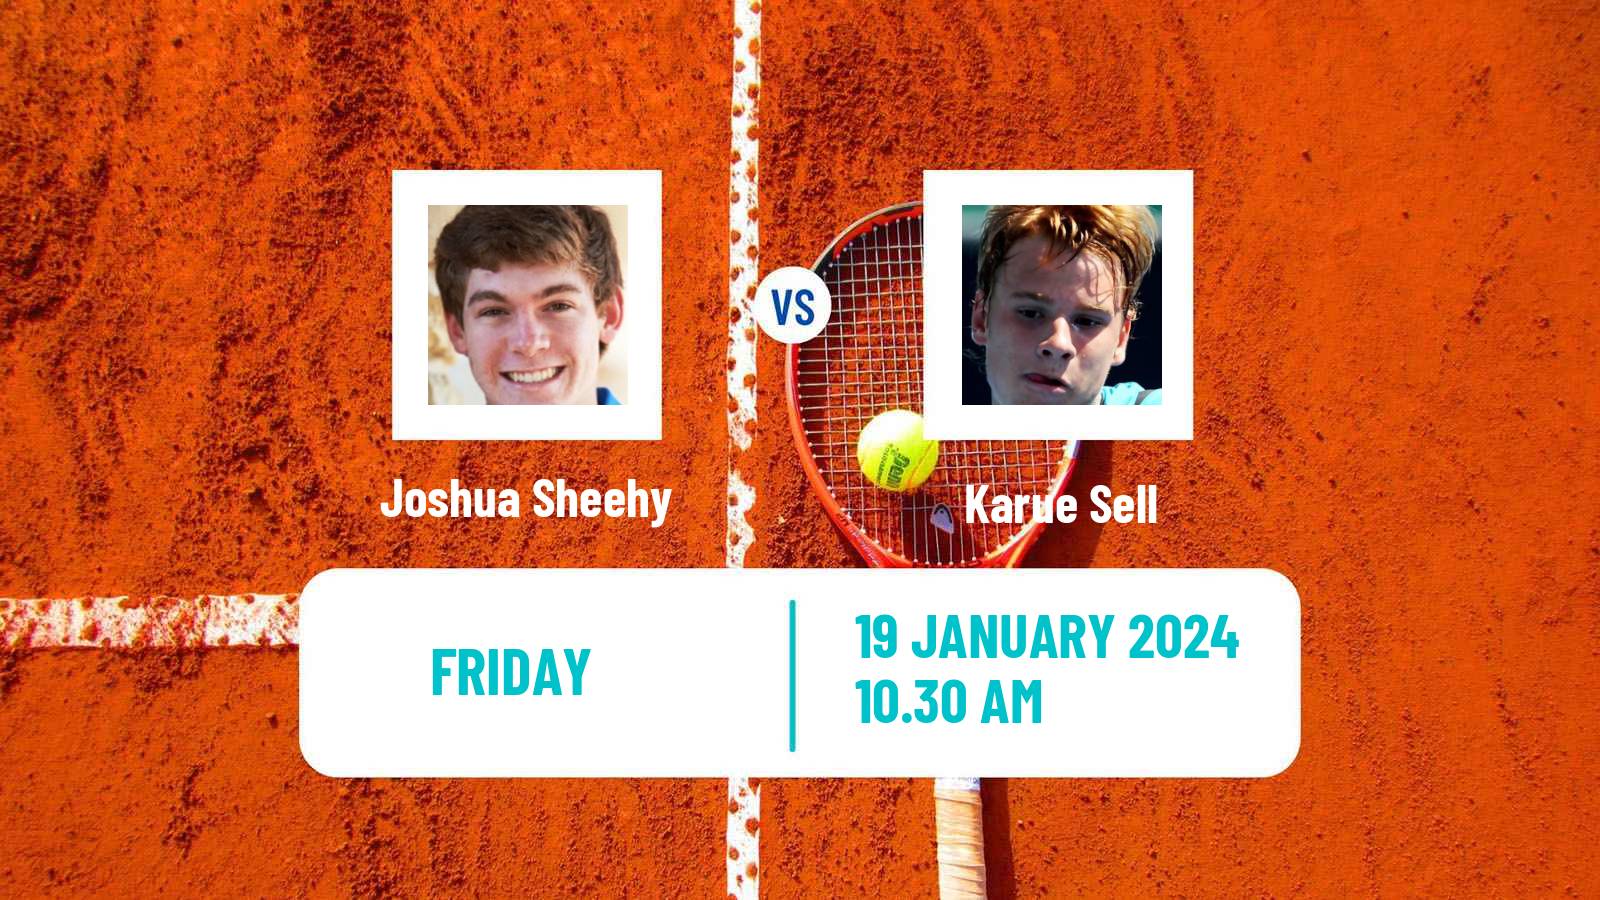 Tennis ITF M25 Ithaca Ny Men Joshua Sheehy - Karue Sell